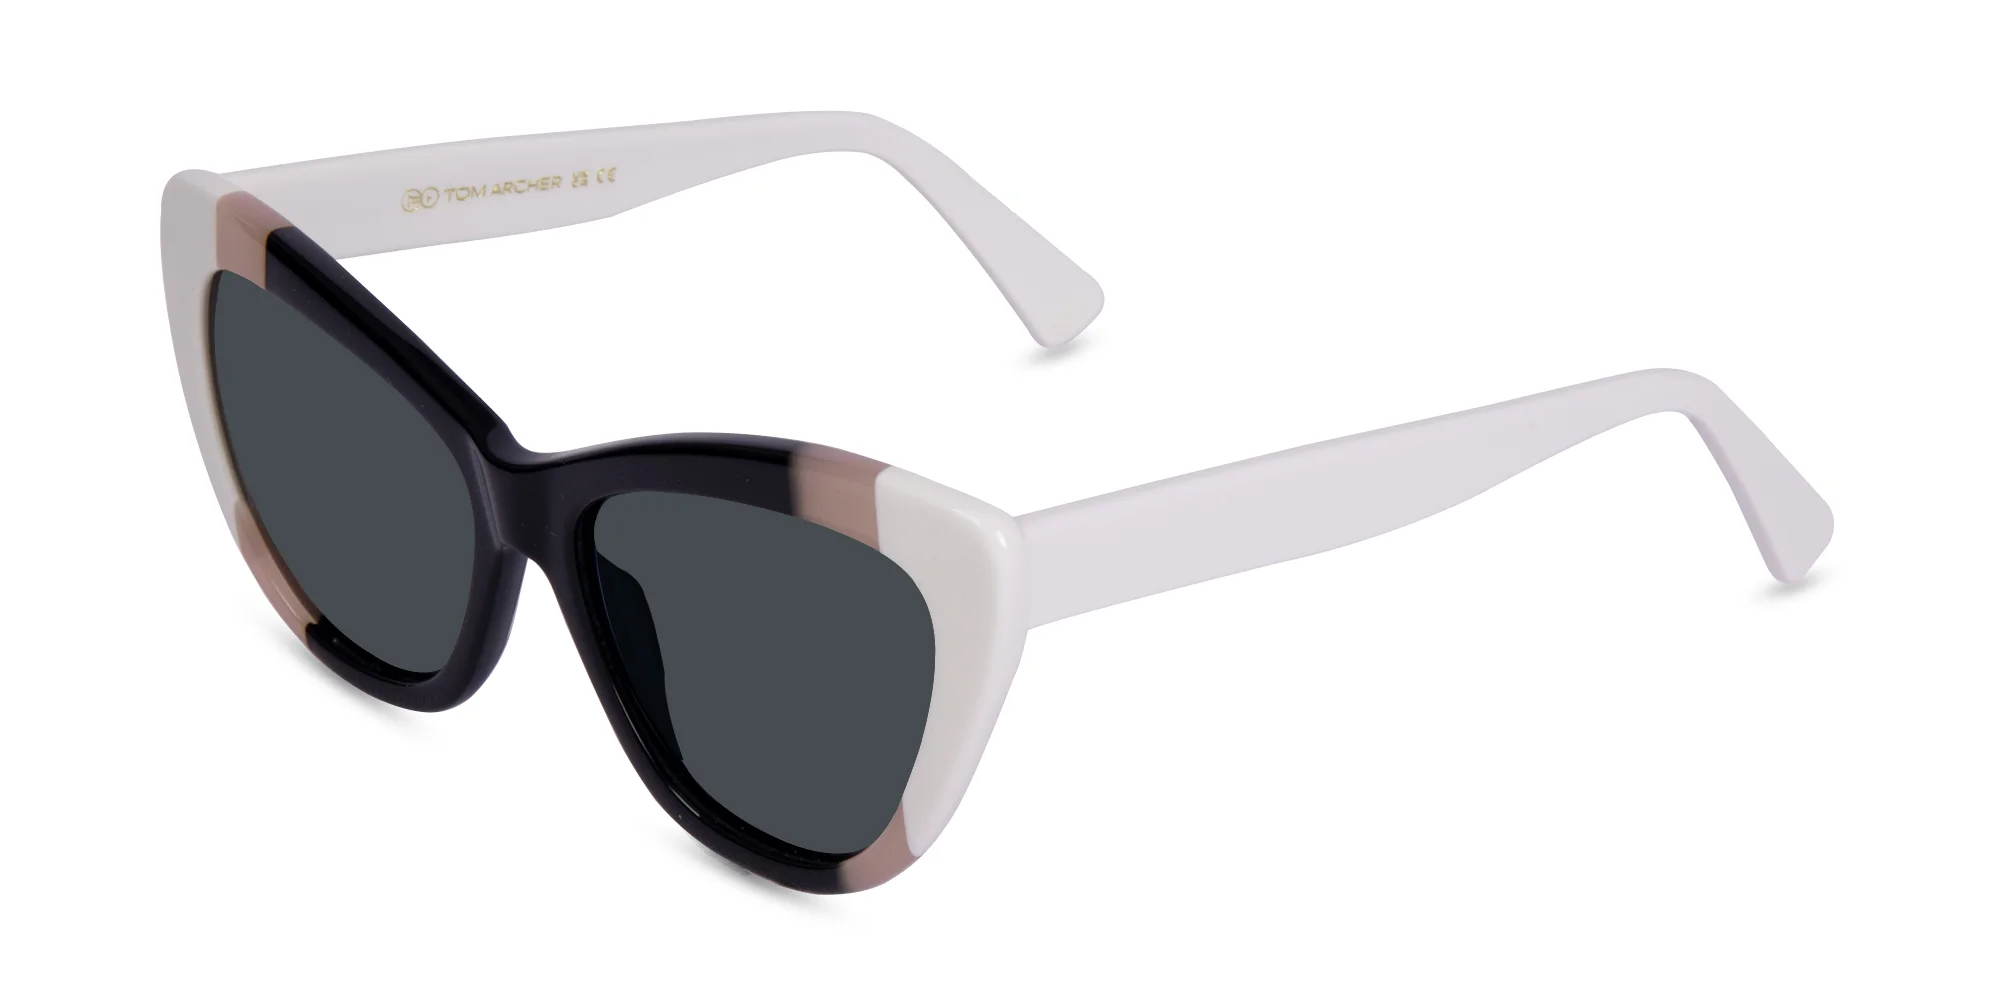 Black And White Sunglasses